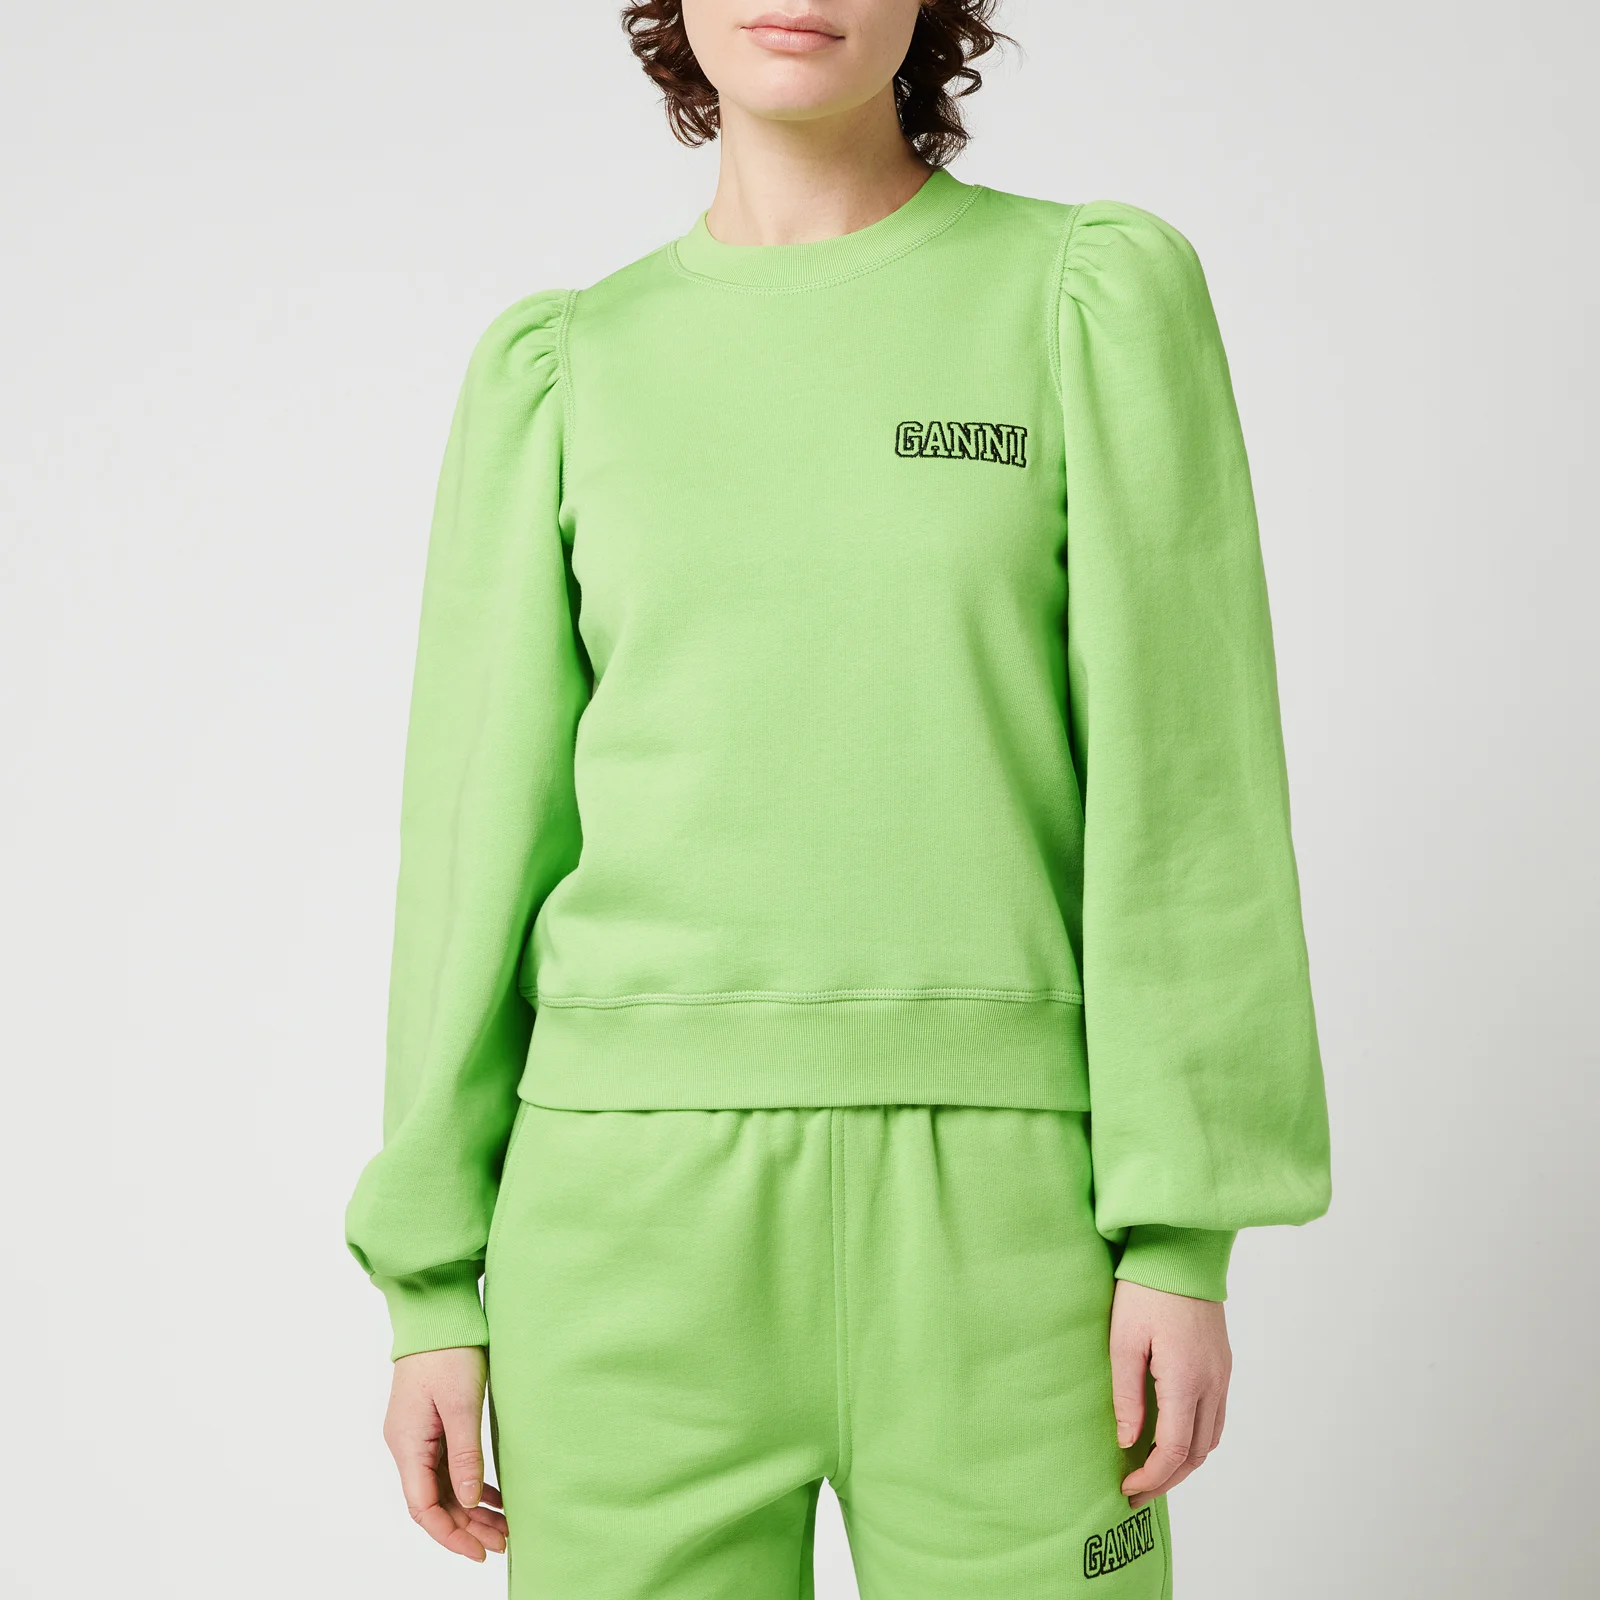 Ganni Women's Isoli Sweatshirt With Puff Sleeve - Flash Green Image 1